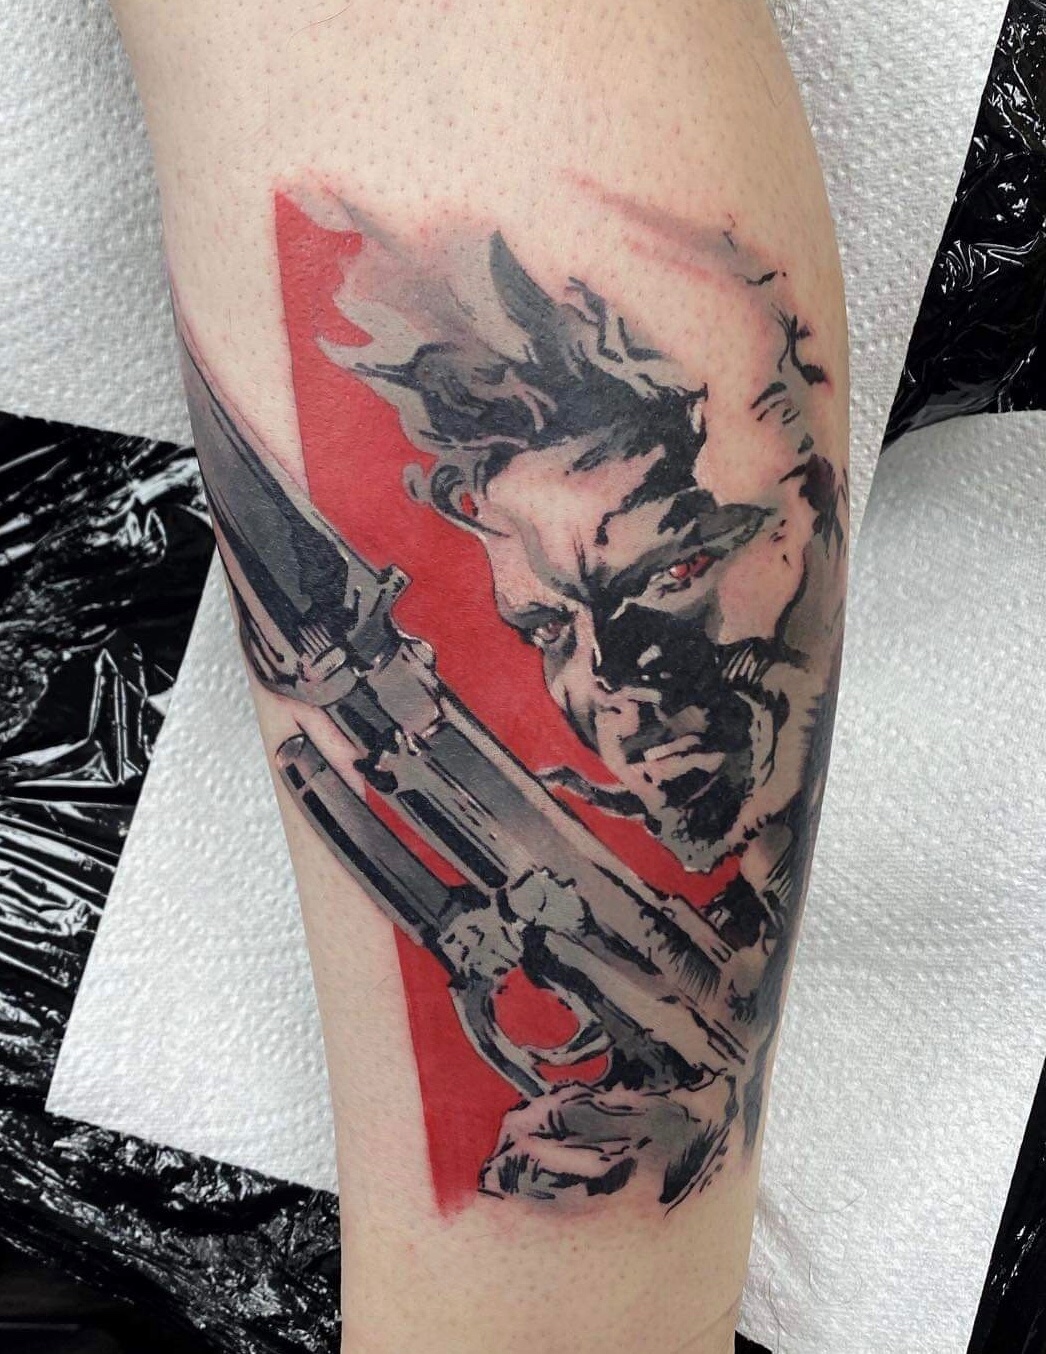 ArtStation  Metal Gear Solid 4 tattoo sleeve